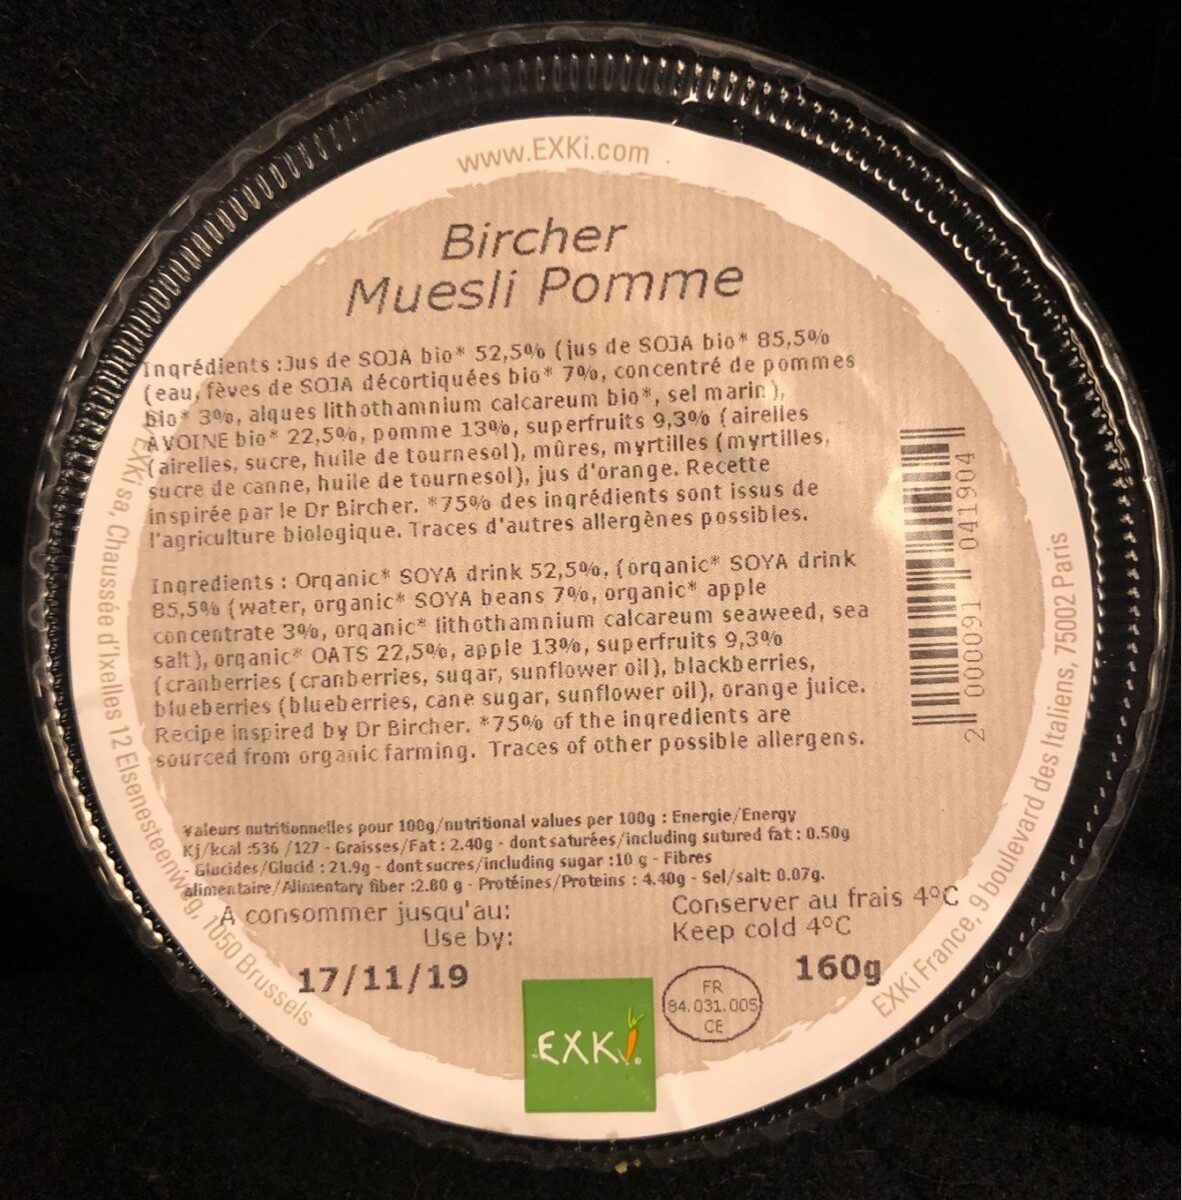 Bircher Muesli Pomme - Product - fr